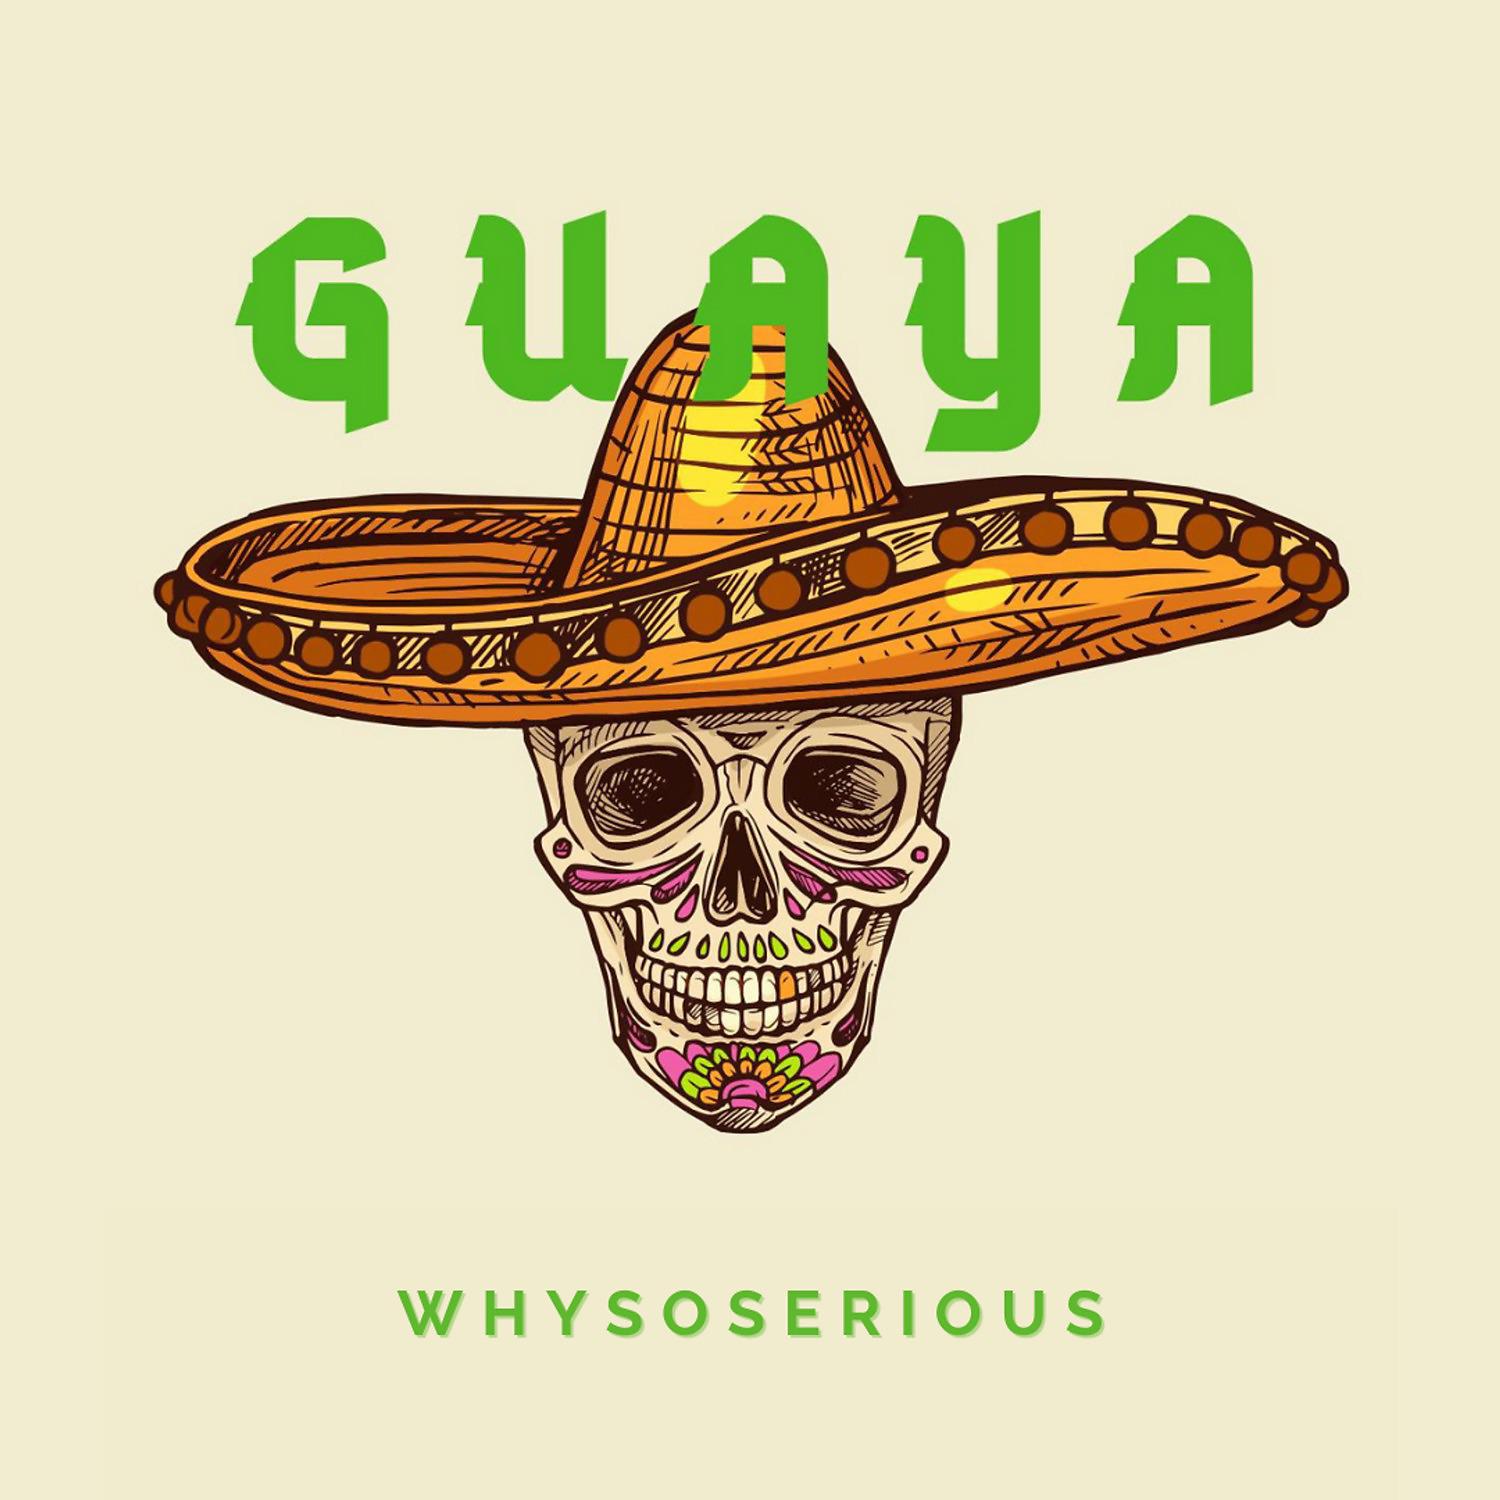 Постер альбома Guaya